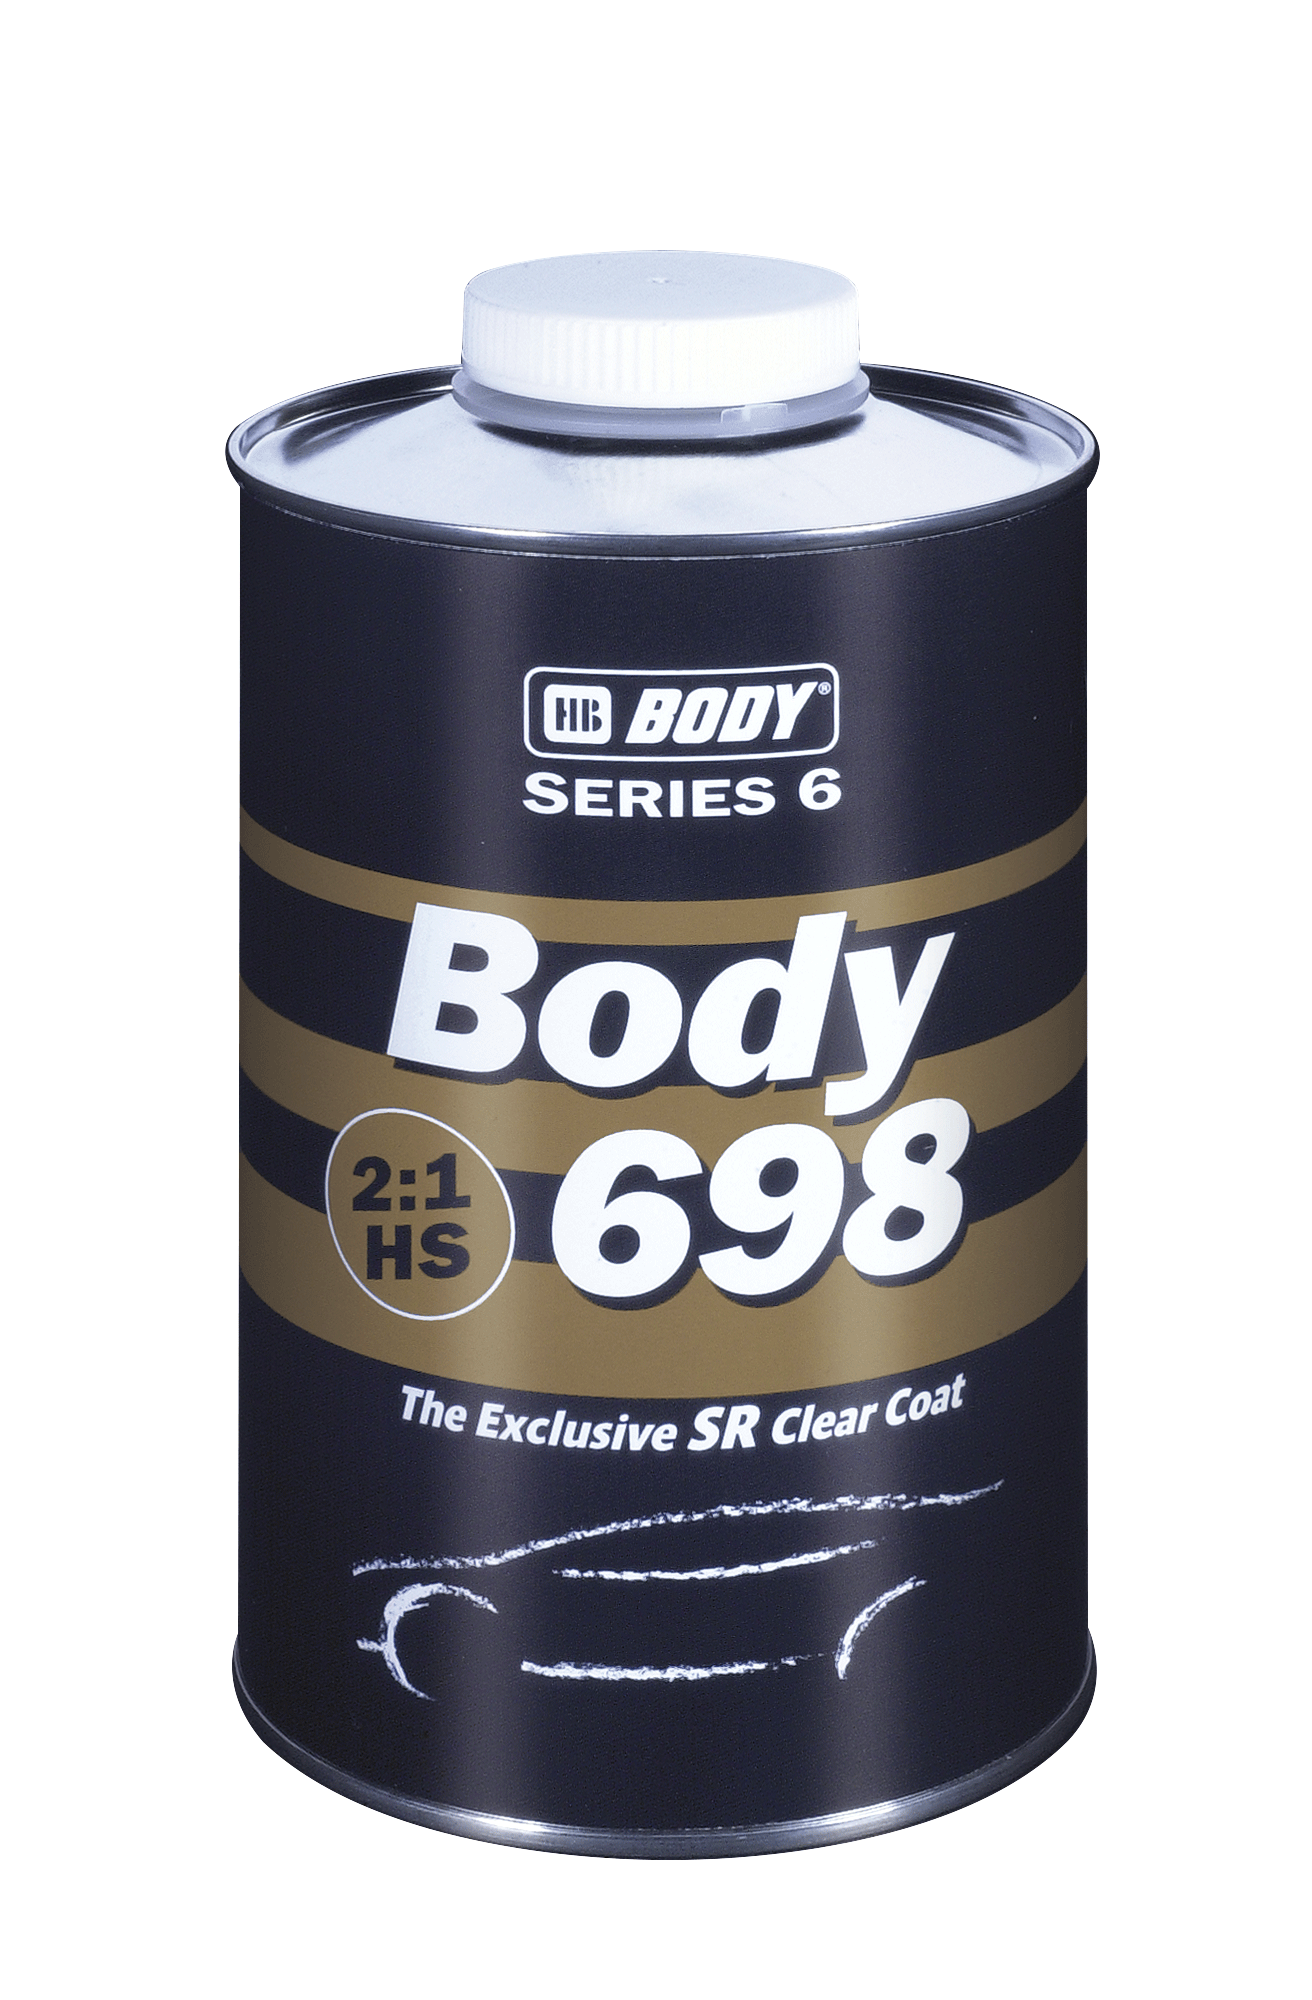 E-shop HB BODY Body 698 2:1 HS Clearcoat SR 1L